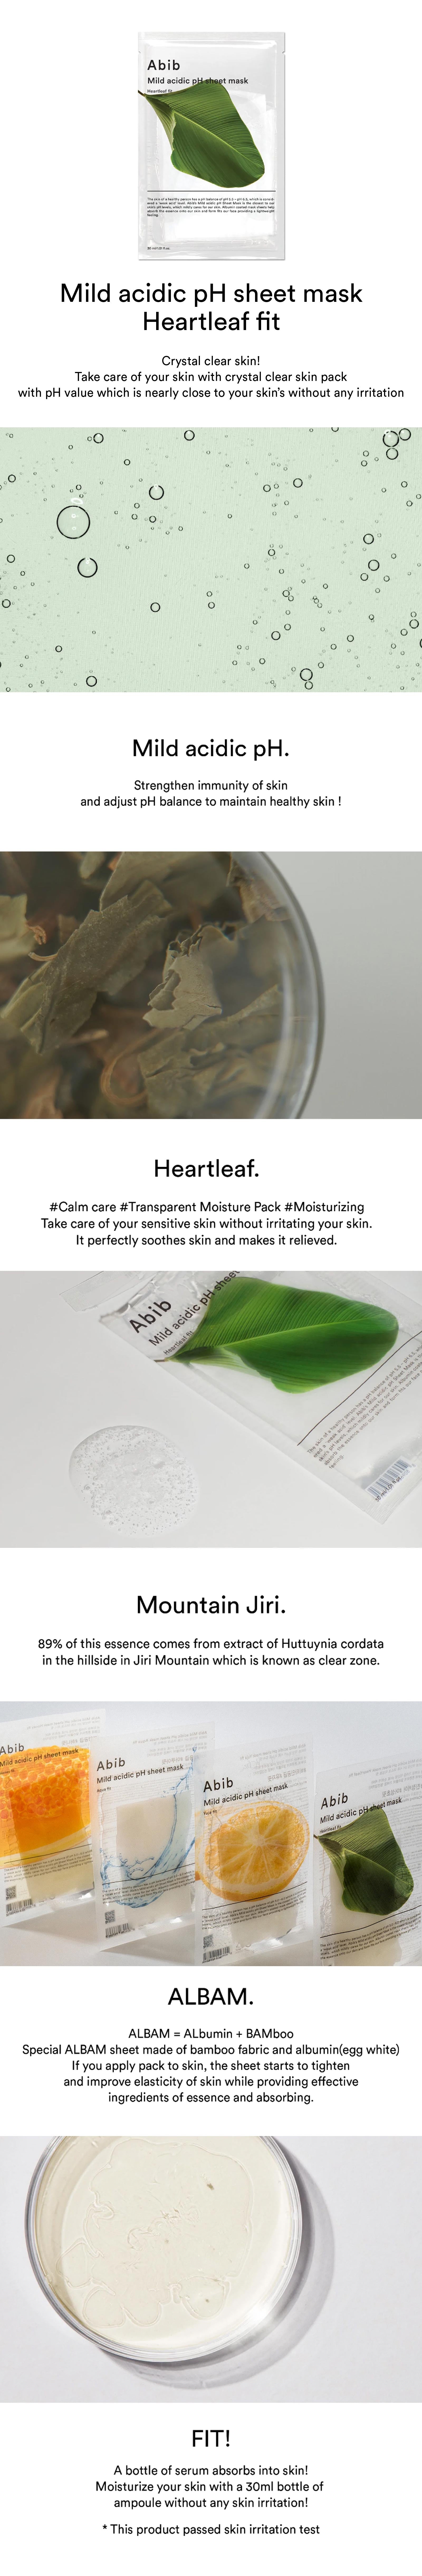 [Abib]Mild acidic pH sheet mask Heartleaf fit-2